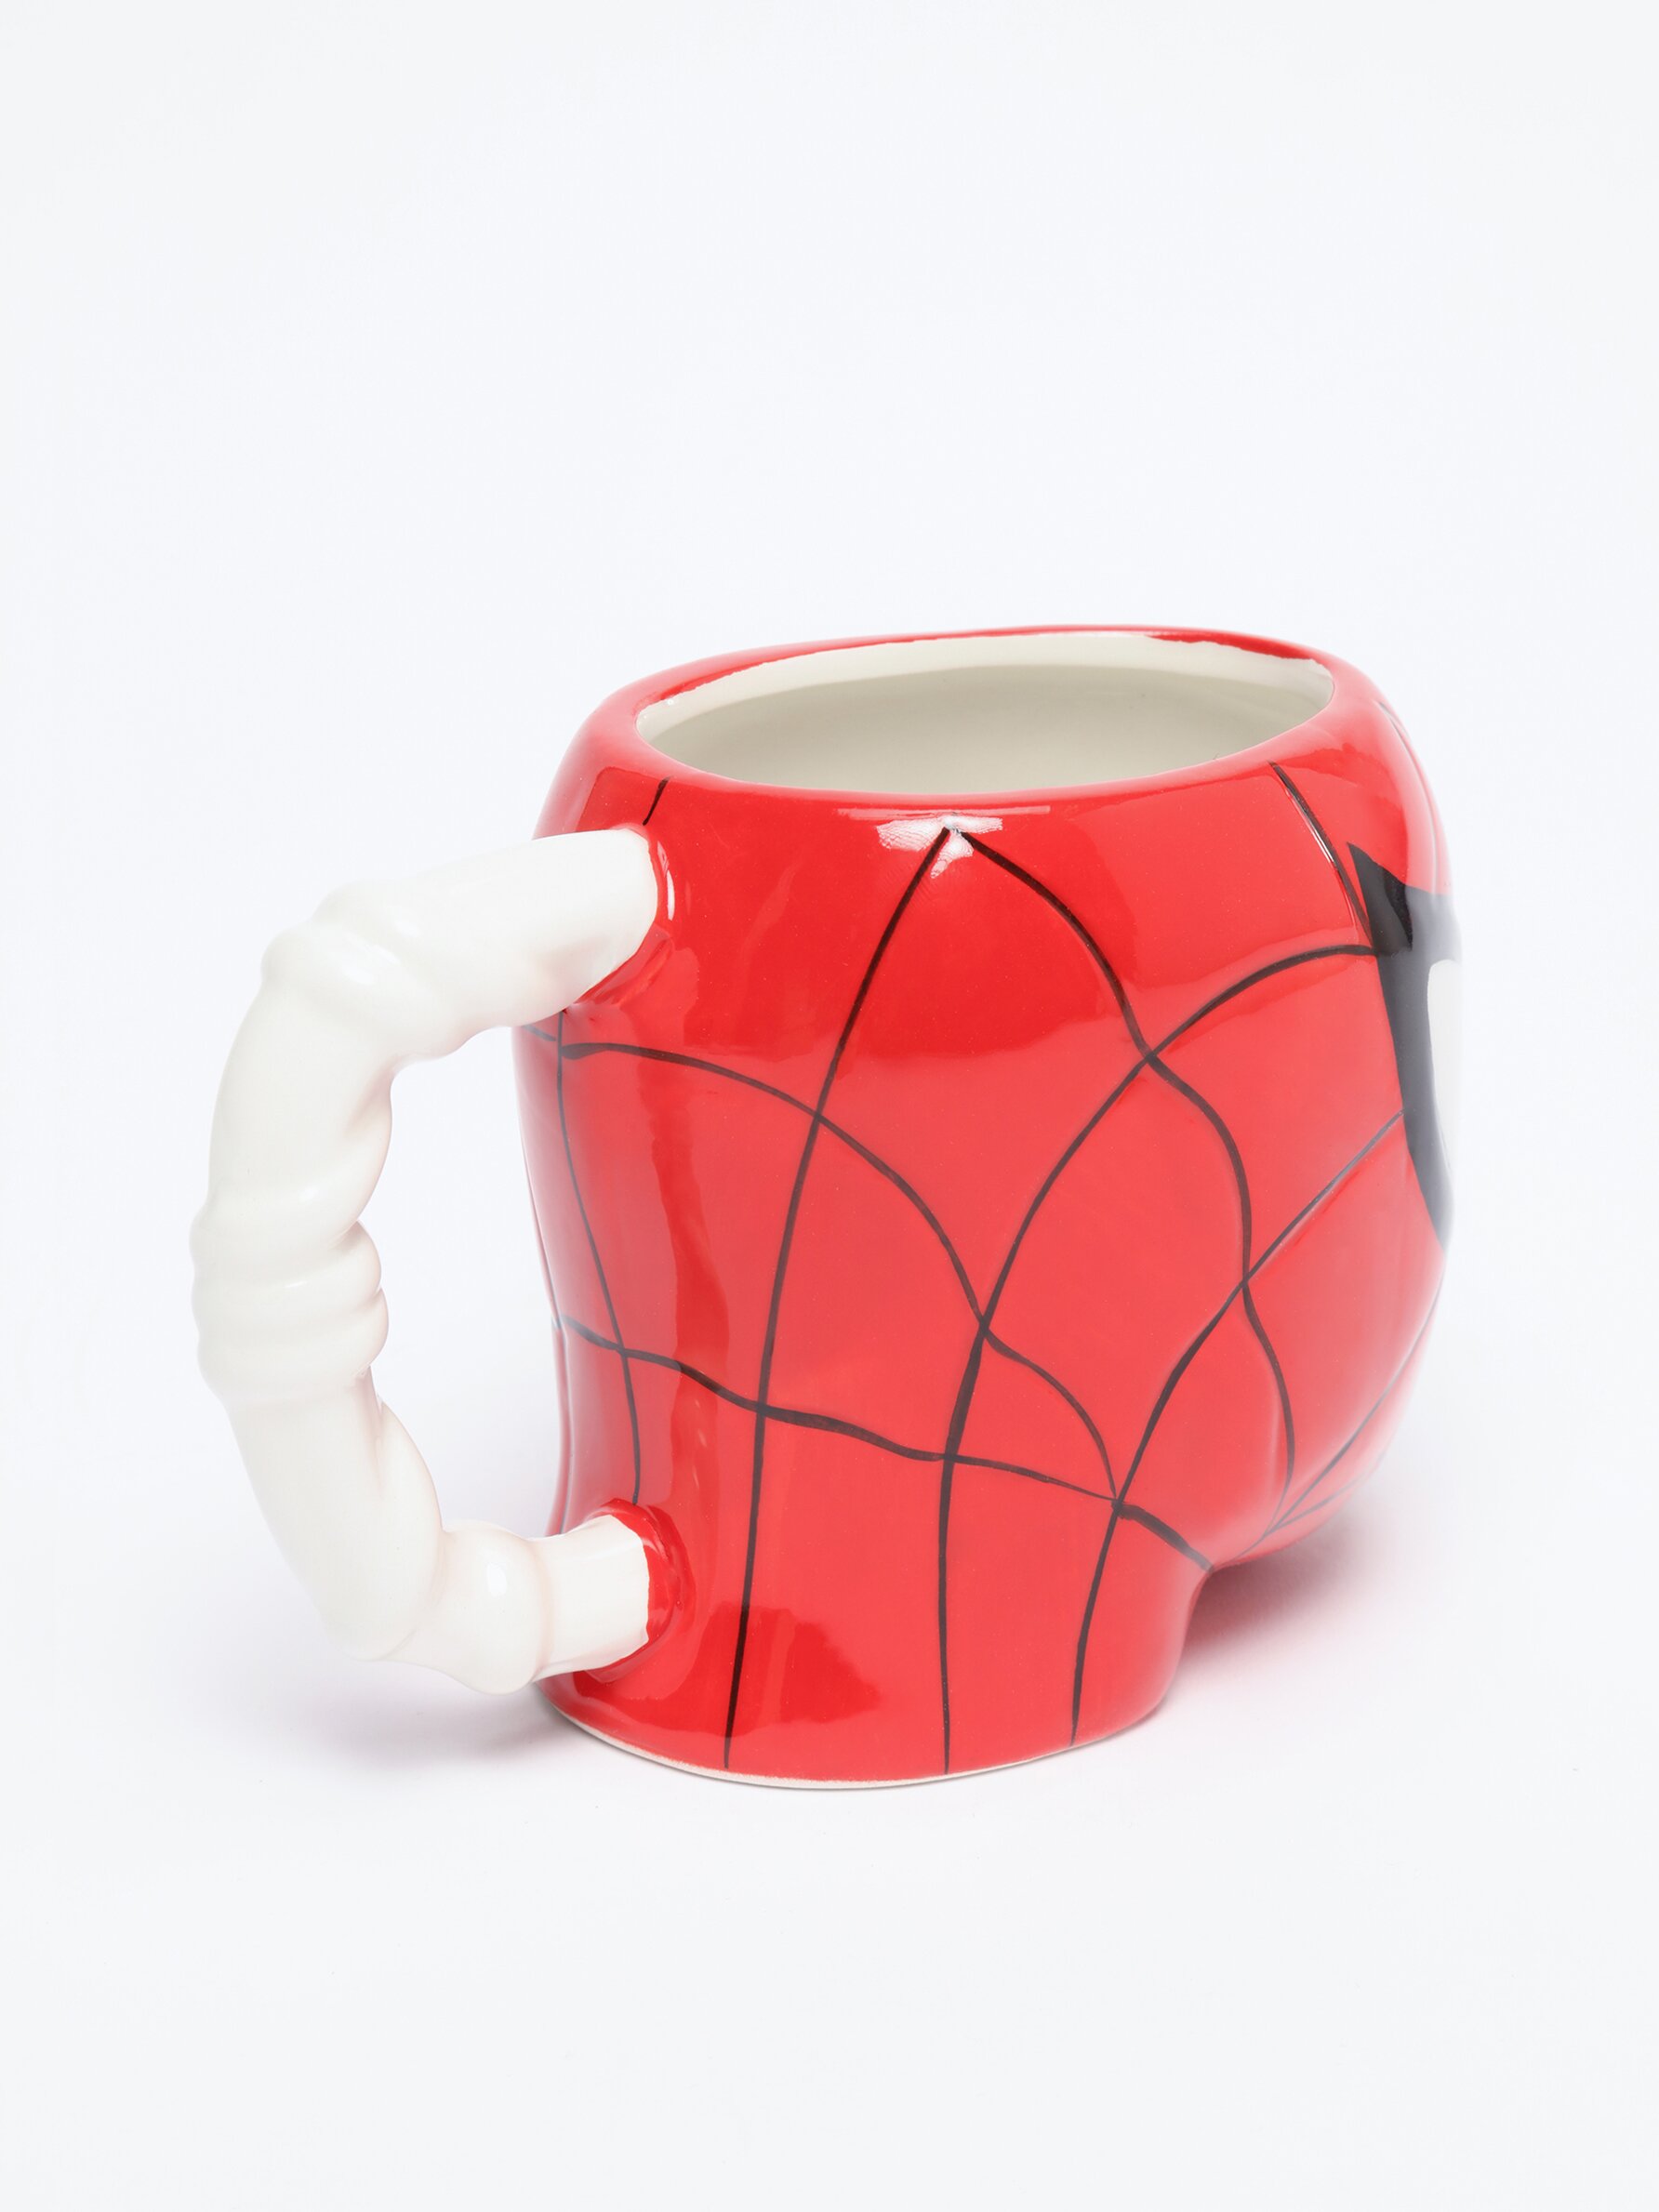 Mug 3D en céramique Spiderman - 330 ml - My Party Kidz